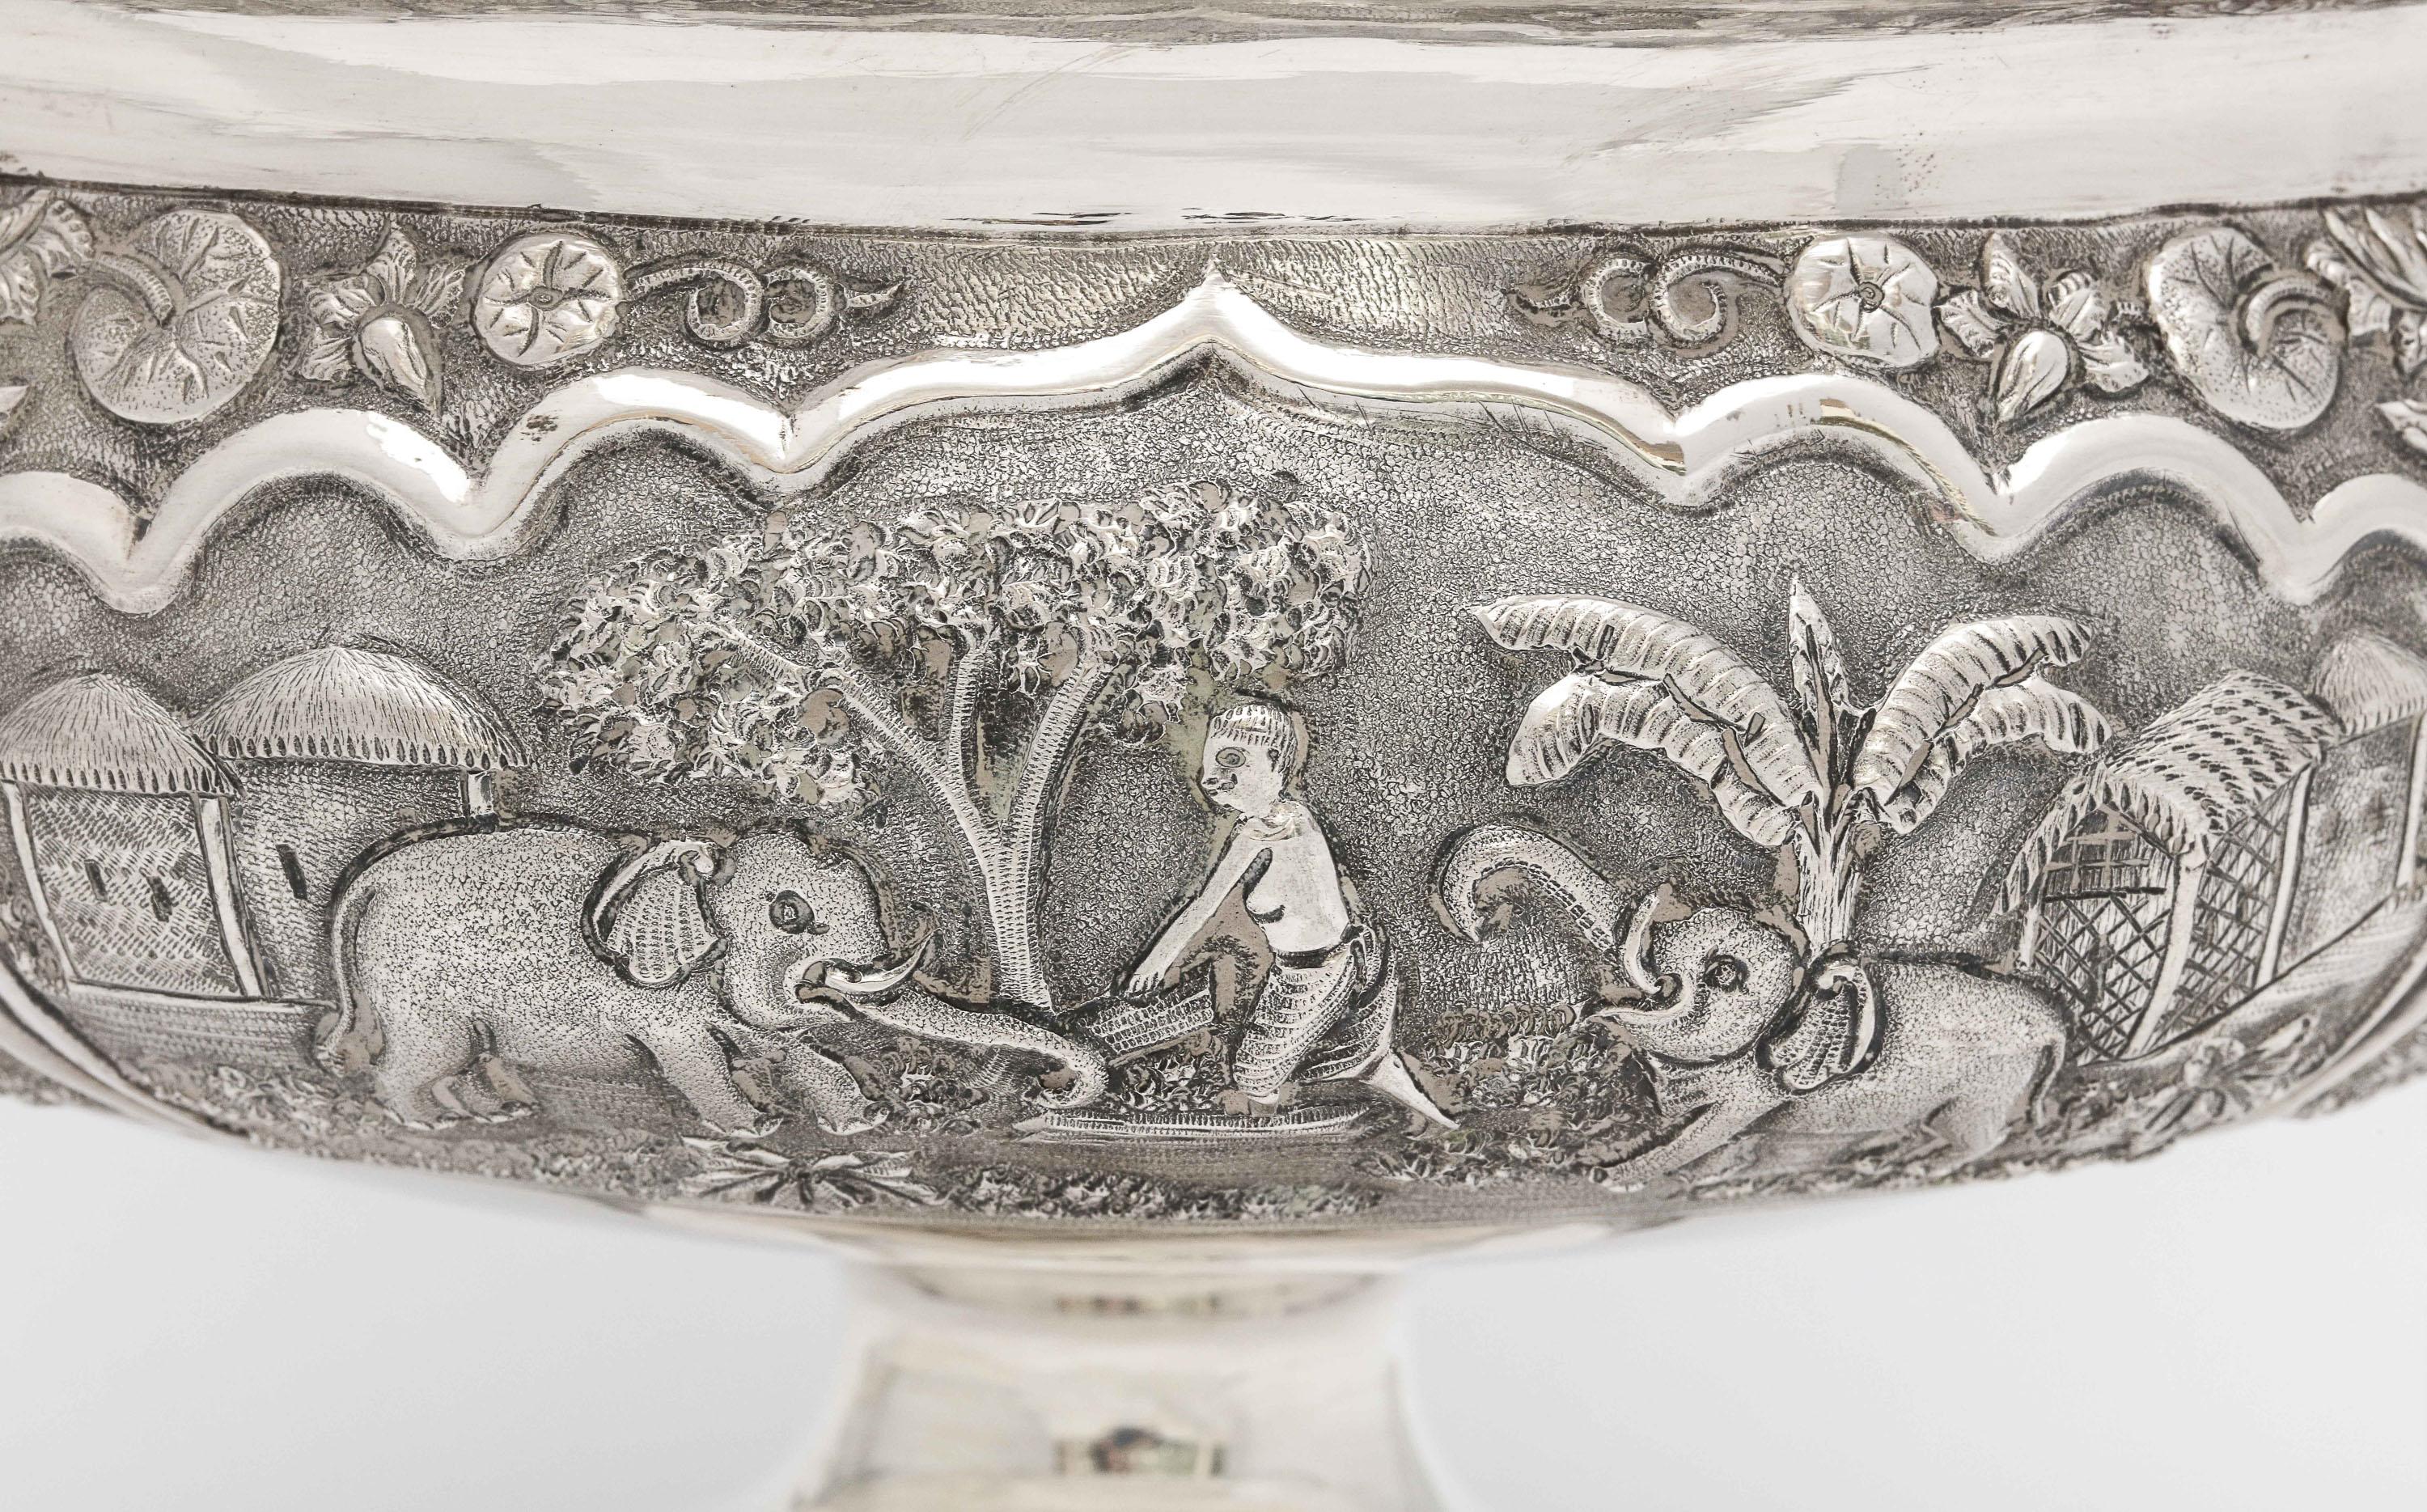 Southeast Asian Late 19th Century Burmese/Myanmar Silver Pedestal-Based Bowl